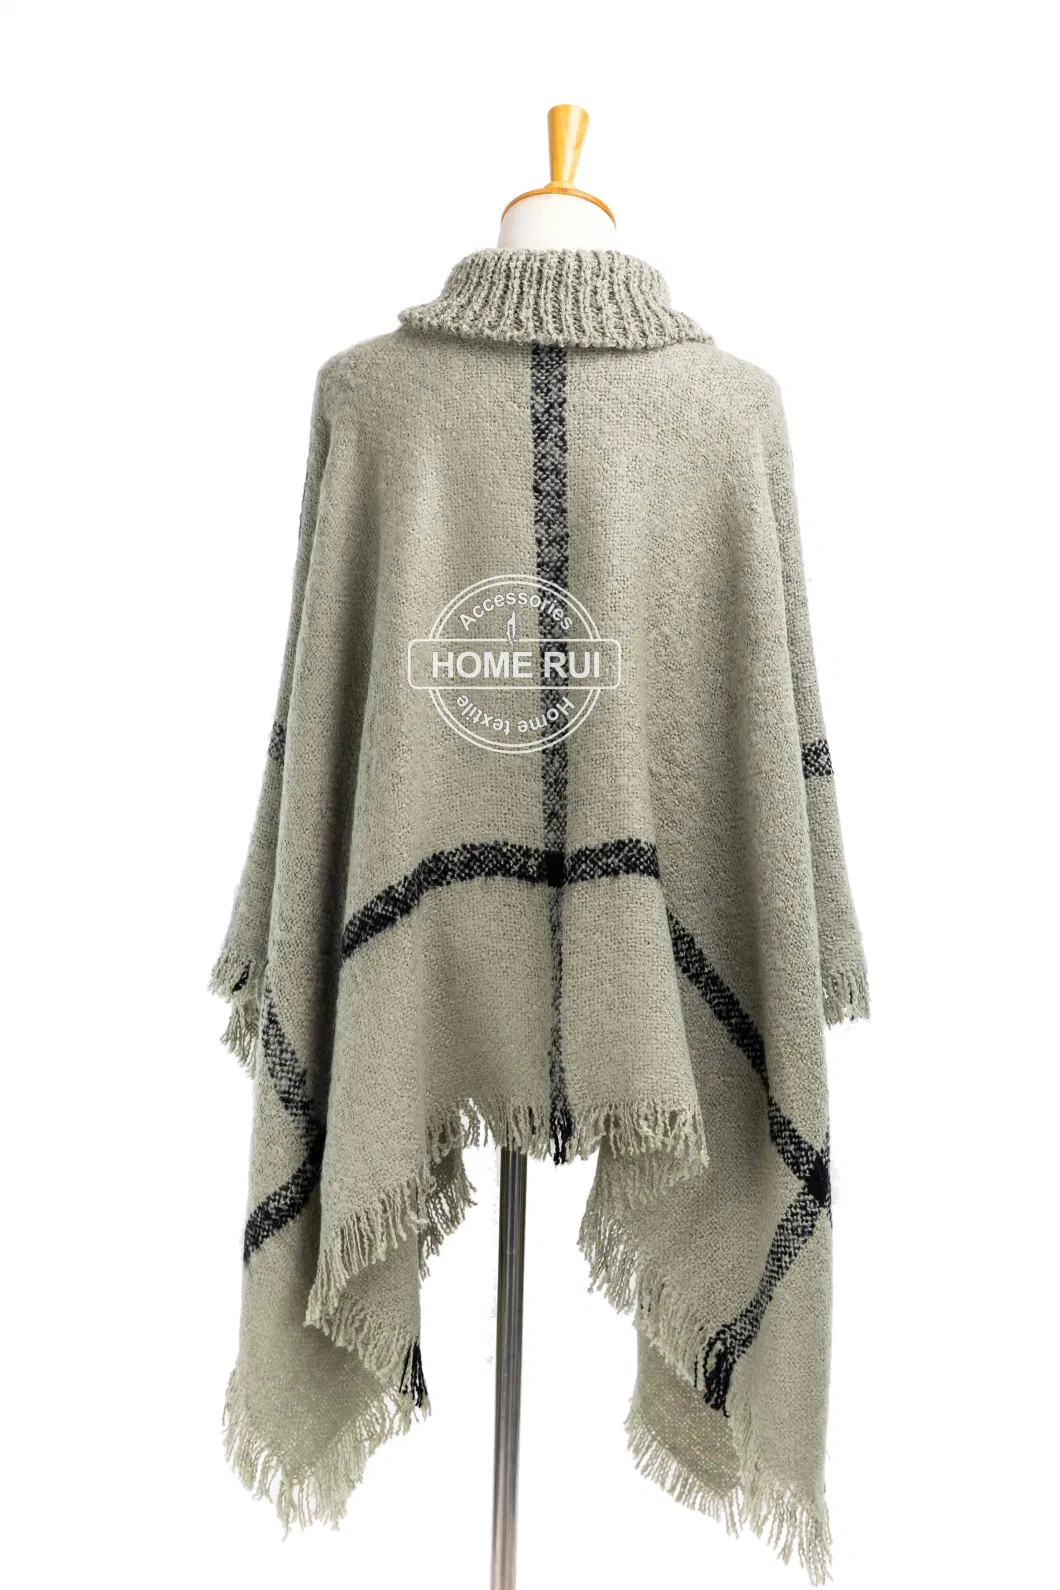 Outfit Fall Winter Lady Fashion Woven Plus Breathable Batwing Classic Mixed Block Tassel Wraps Nova Scottish Plaid Checks Sweater Cape High Neck Poncho Cloak